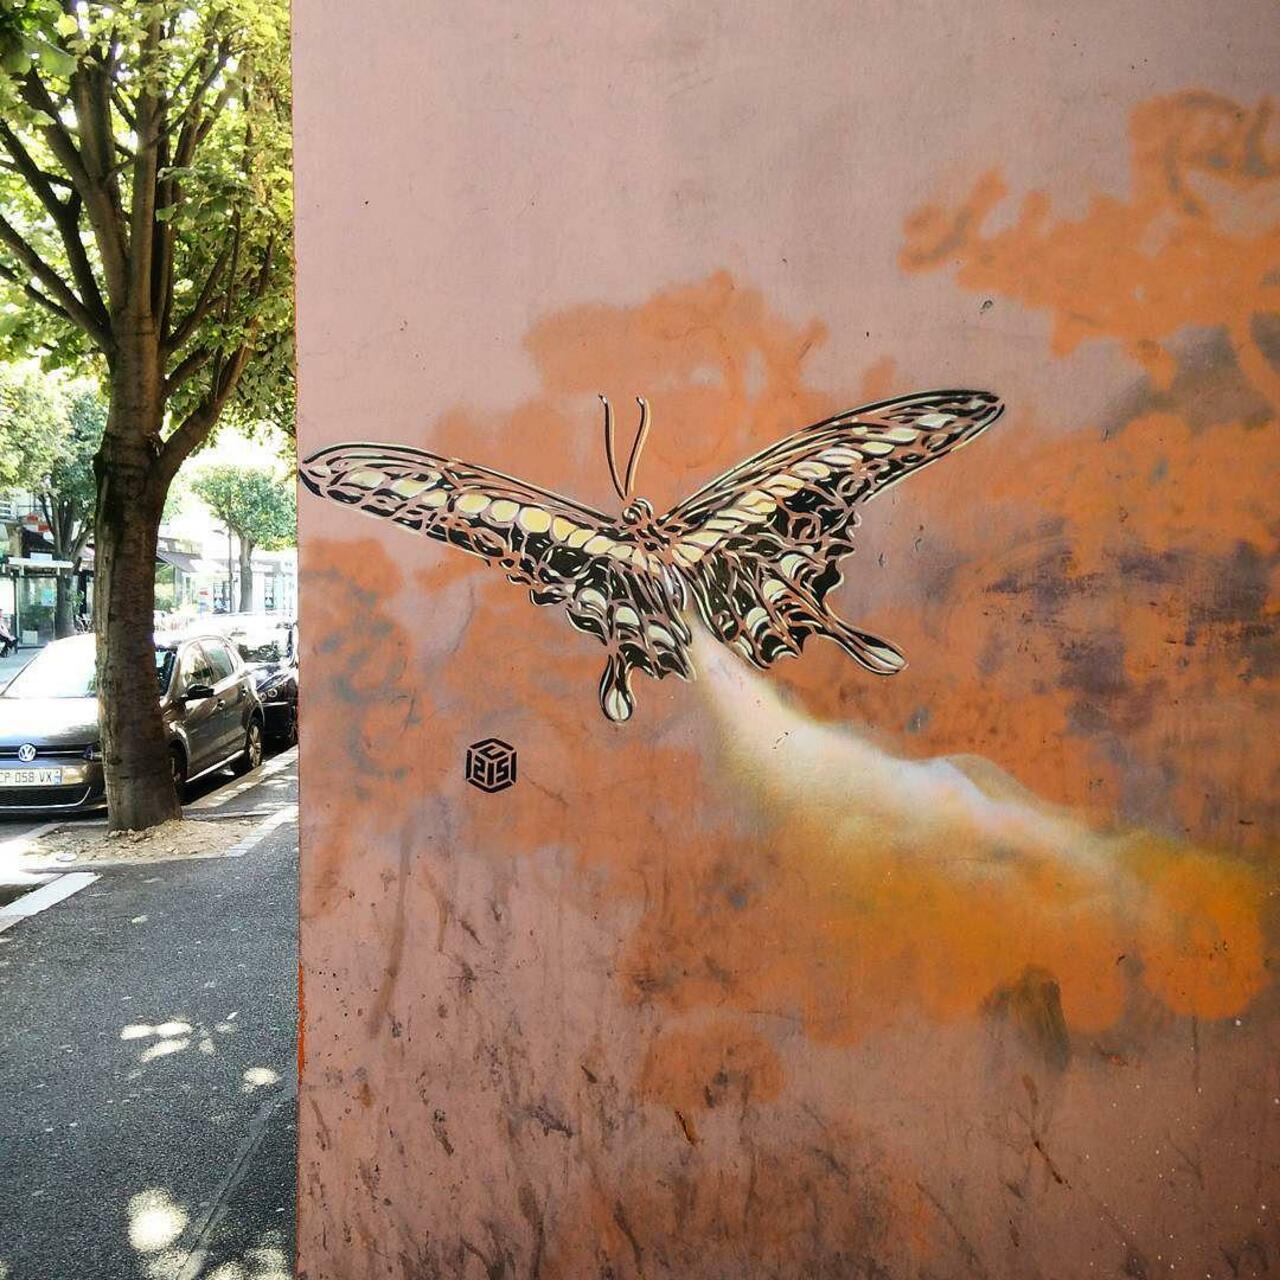 #Paris #graffiti photo by @ceky_art http://ift.tt/1PzK9m1 #StreetArt http://t.co/enV0Pu7OcW